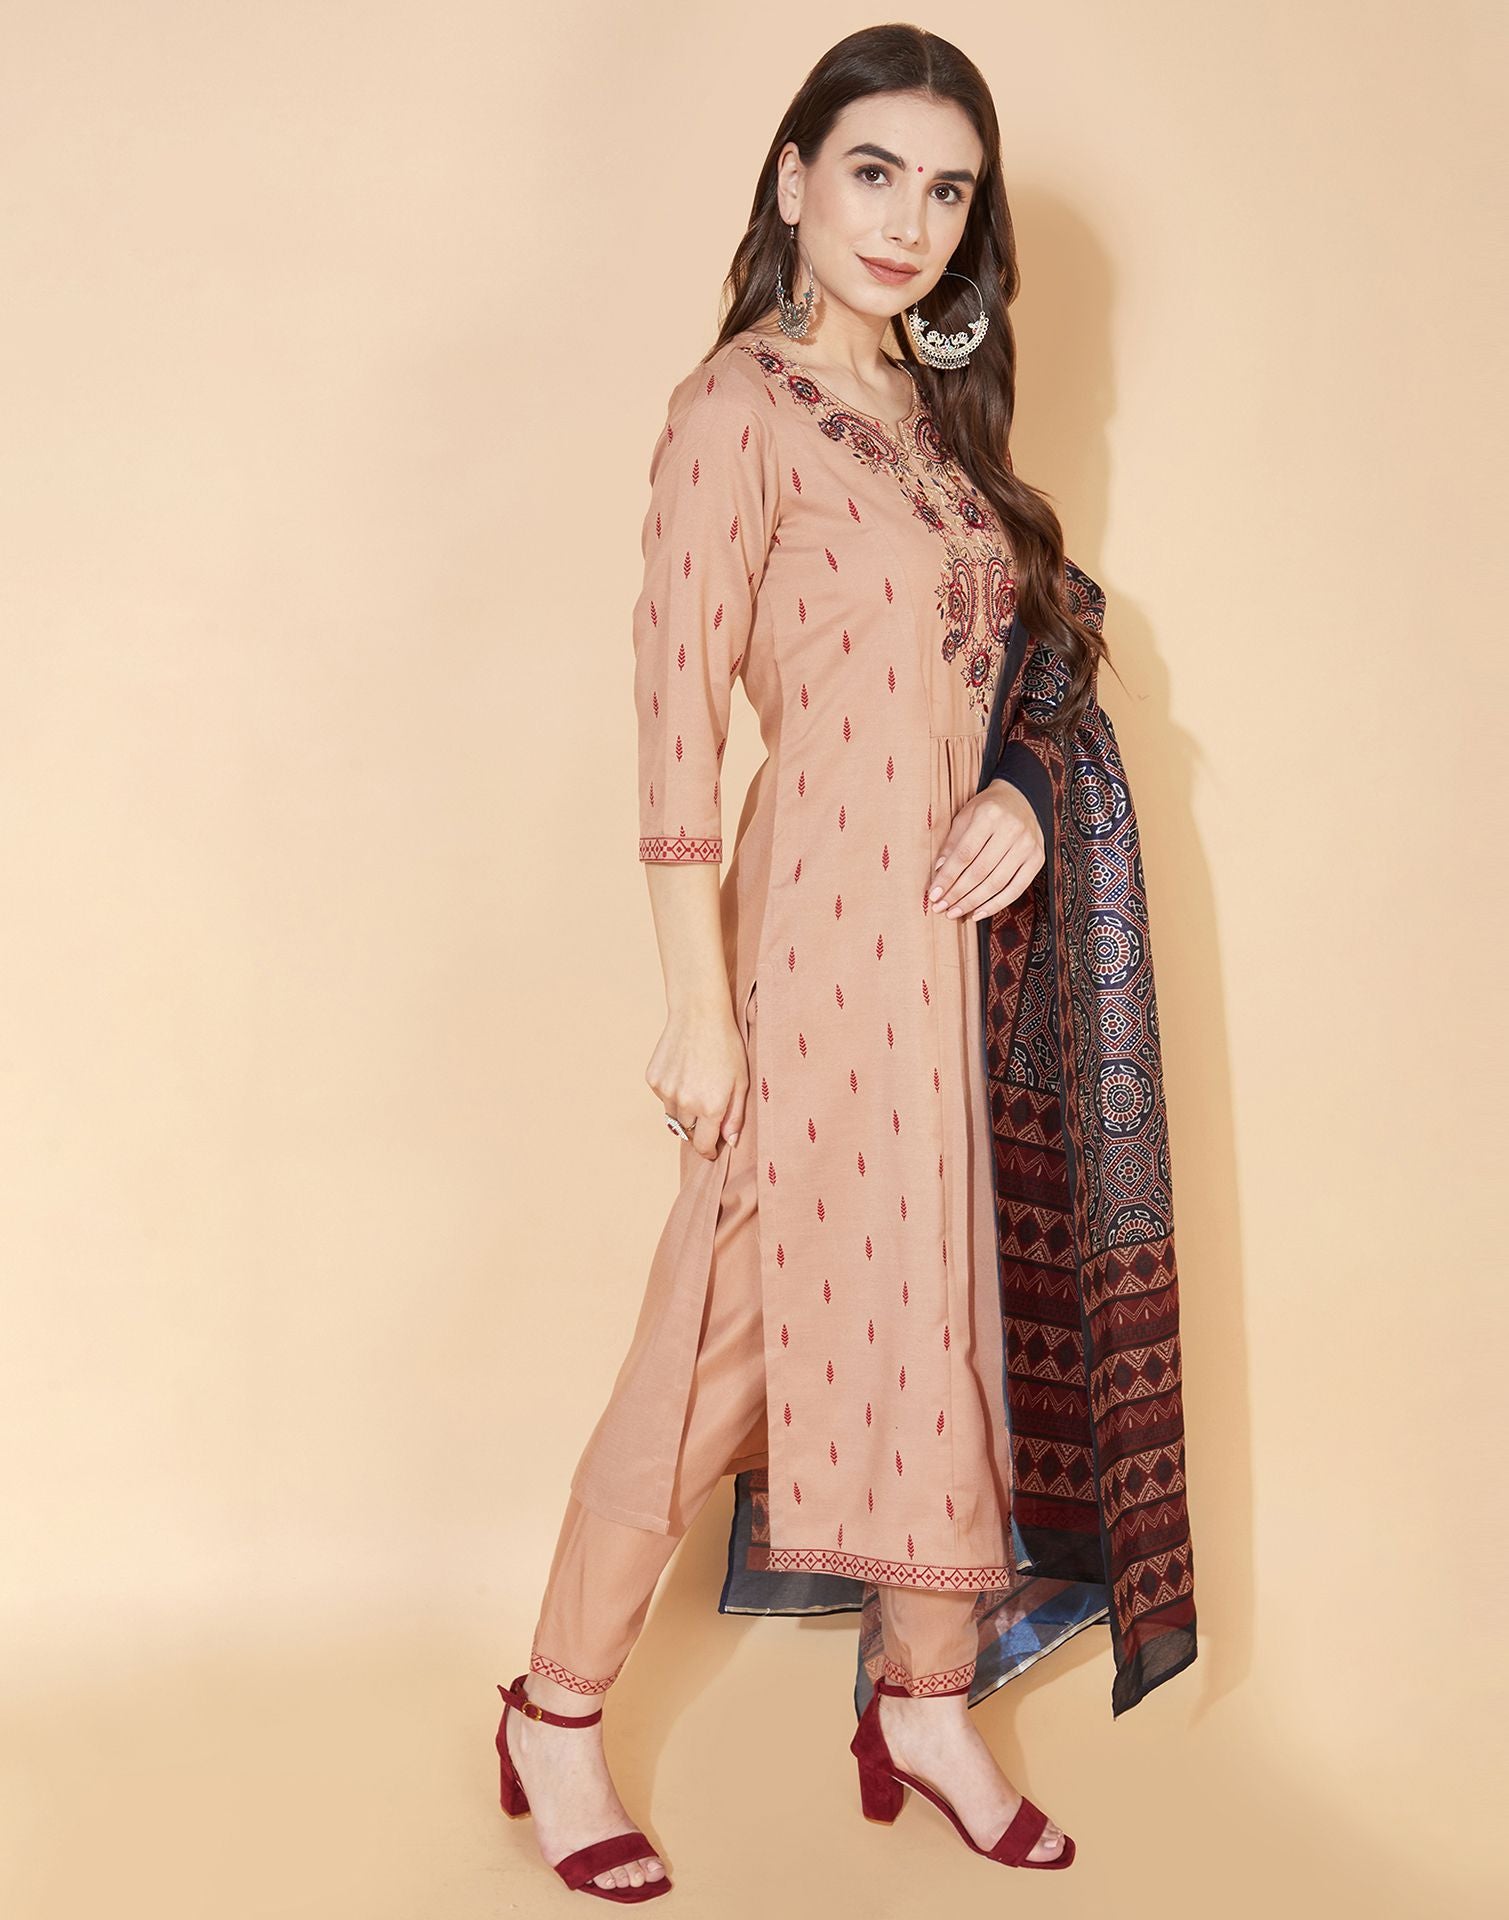 Latest #Brown Colour Kurti Designs|2020|#Brown Colour Dresses And Colour  Combination| - YouTube